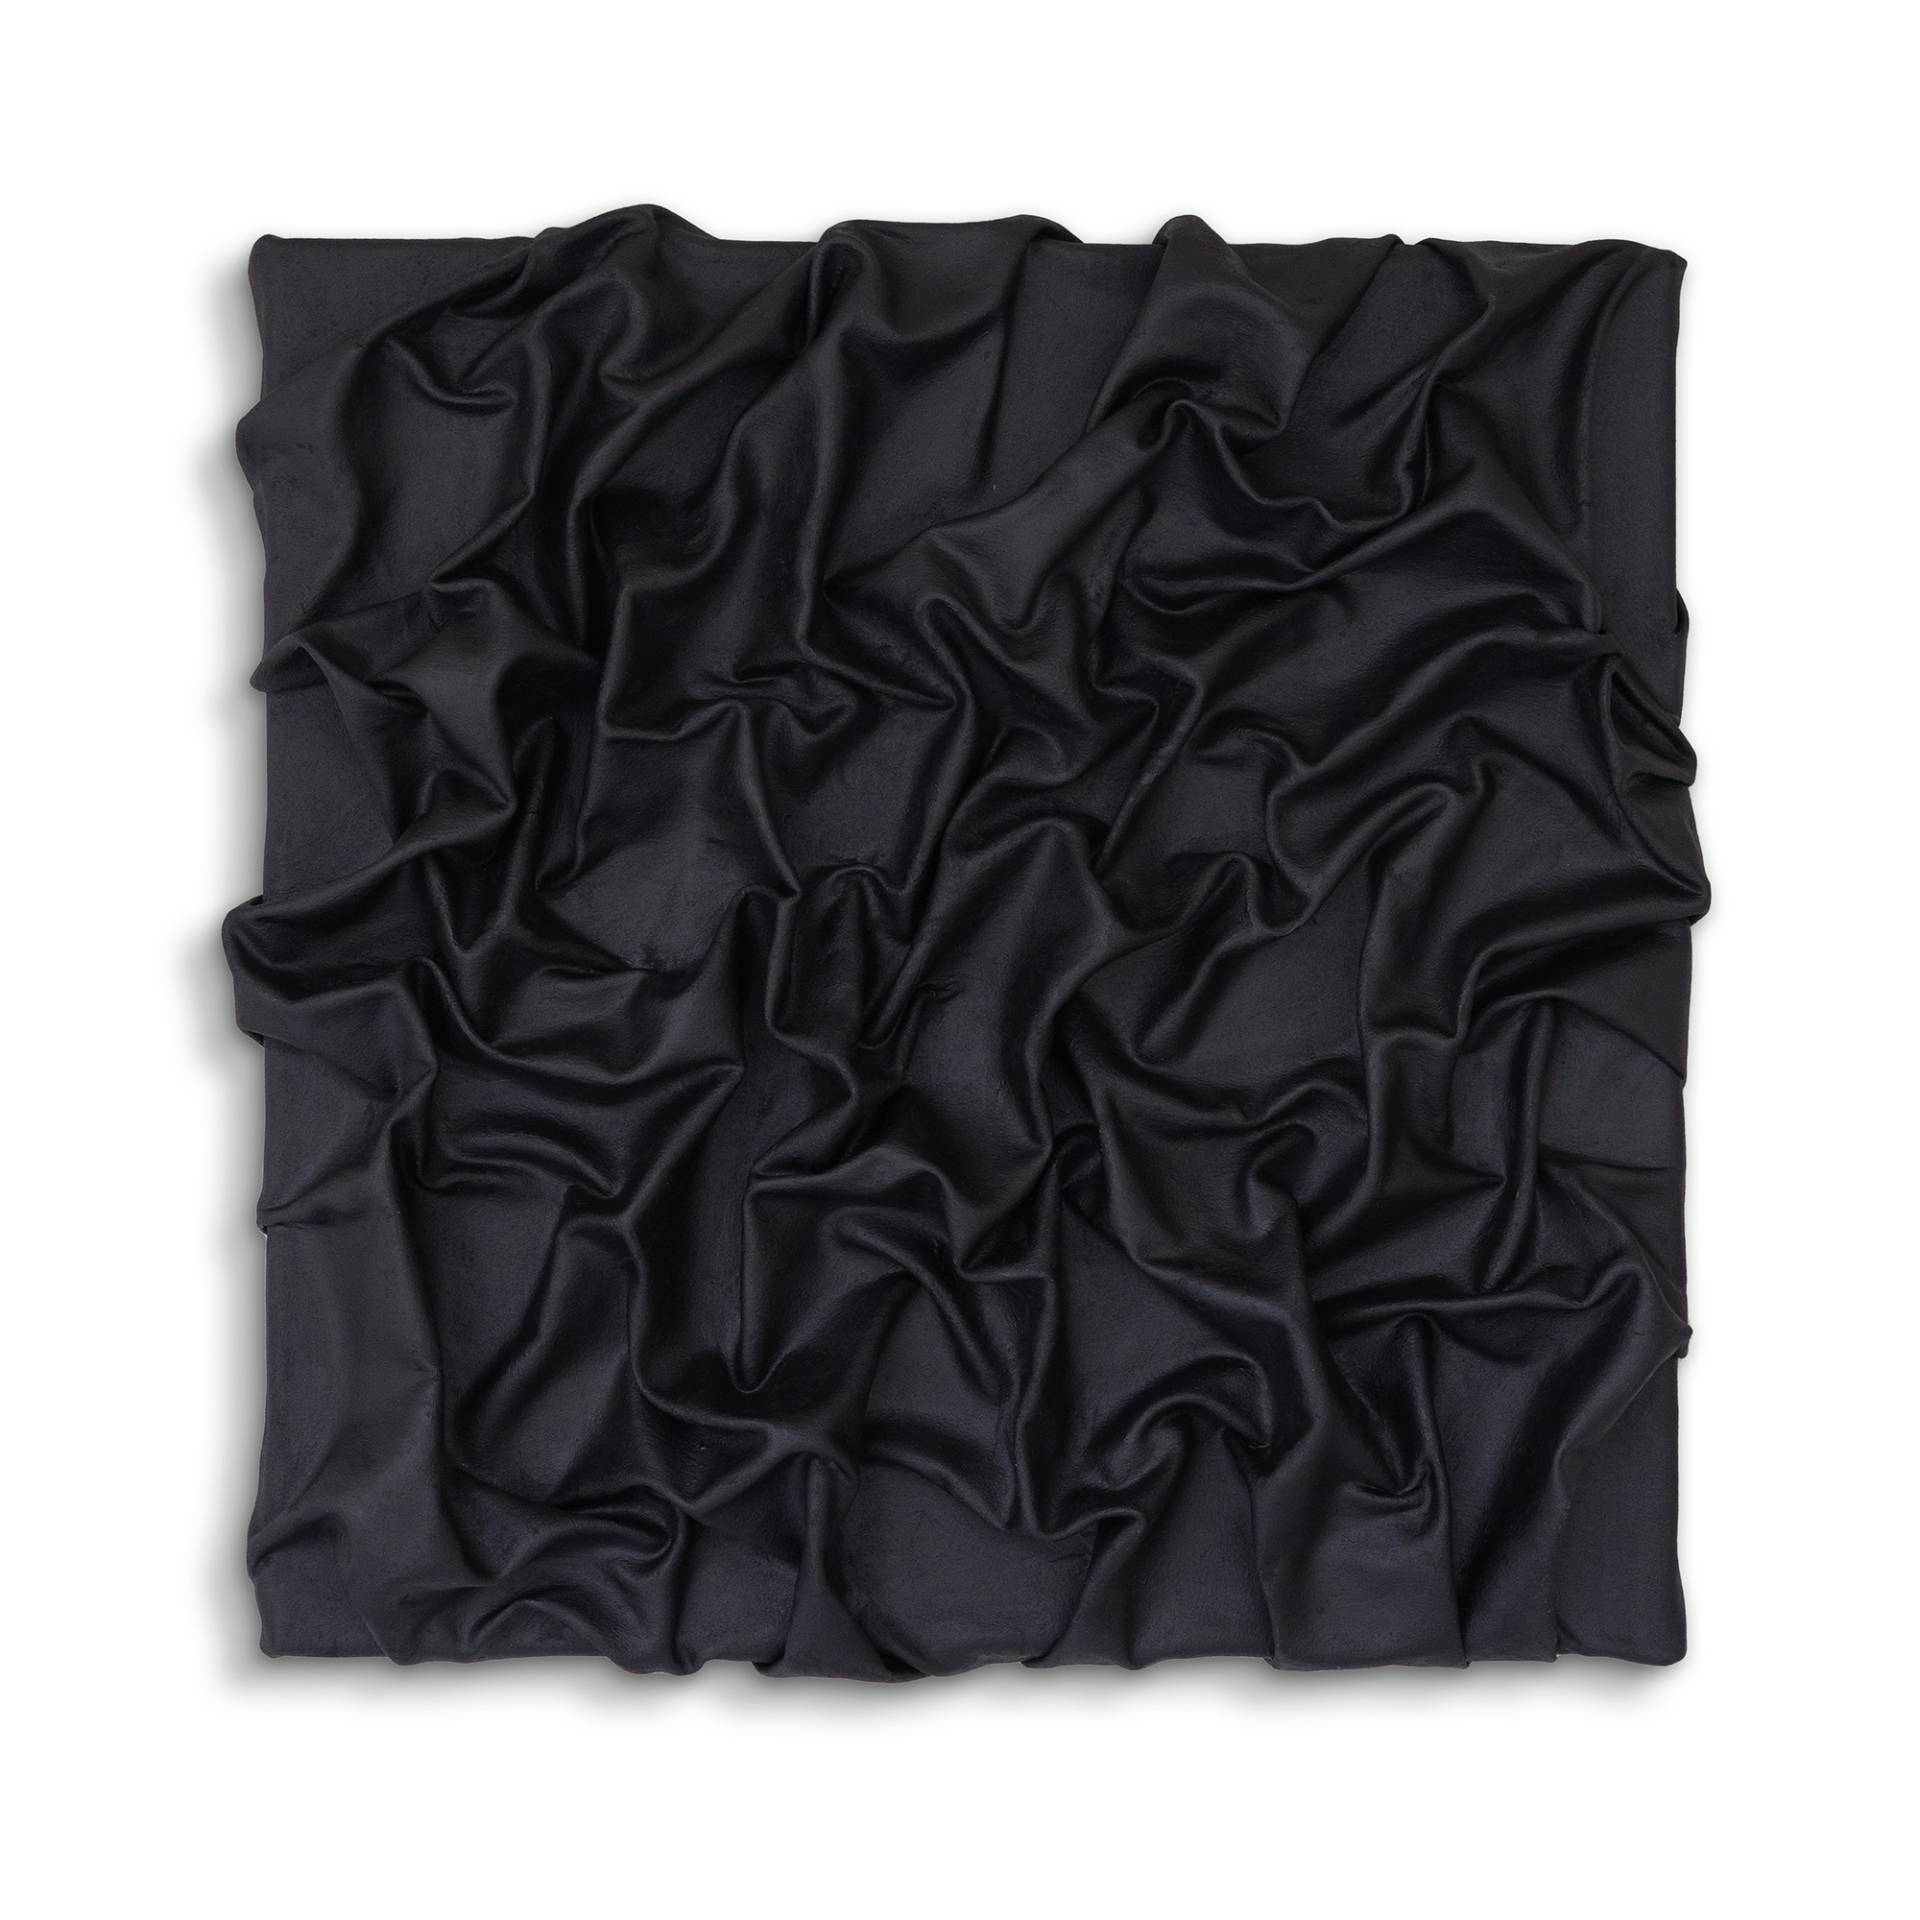 Studio Mykoda - SAHAVA Sculpture Mini M 3D Wanddekoration 50x50cm - schwarz/BxH 50x50cm/Jedes Stück ein Unikat! von Studio Mykoda